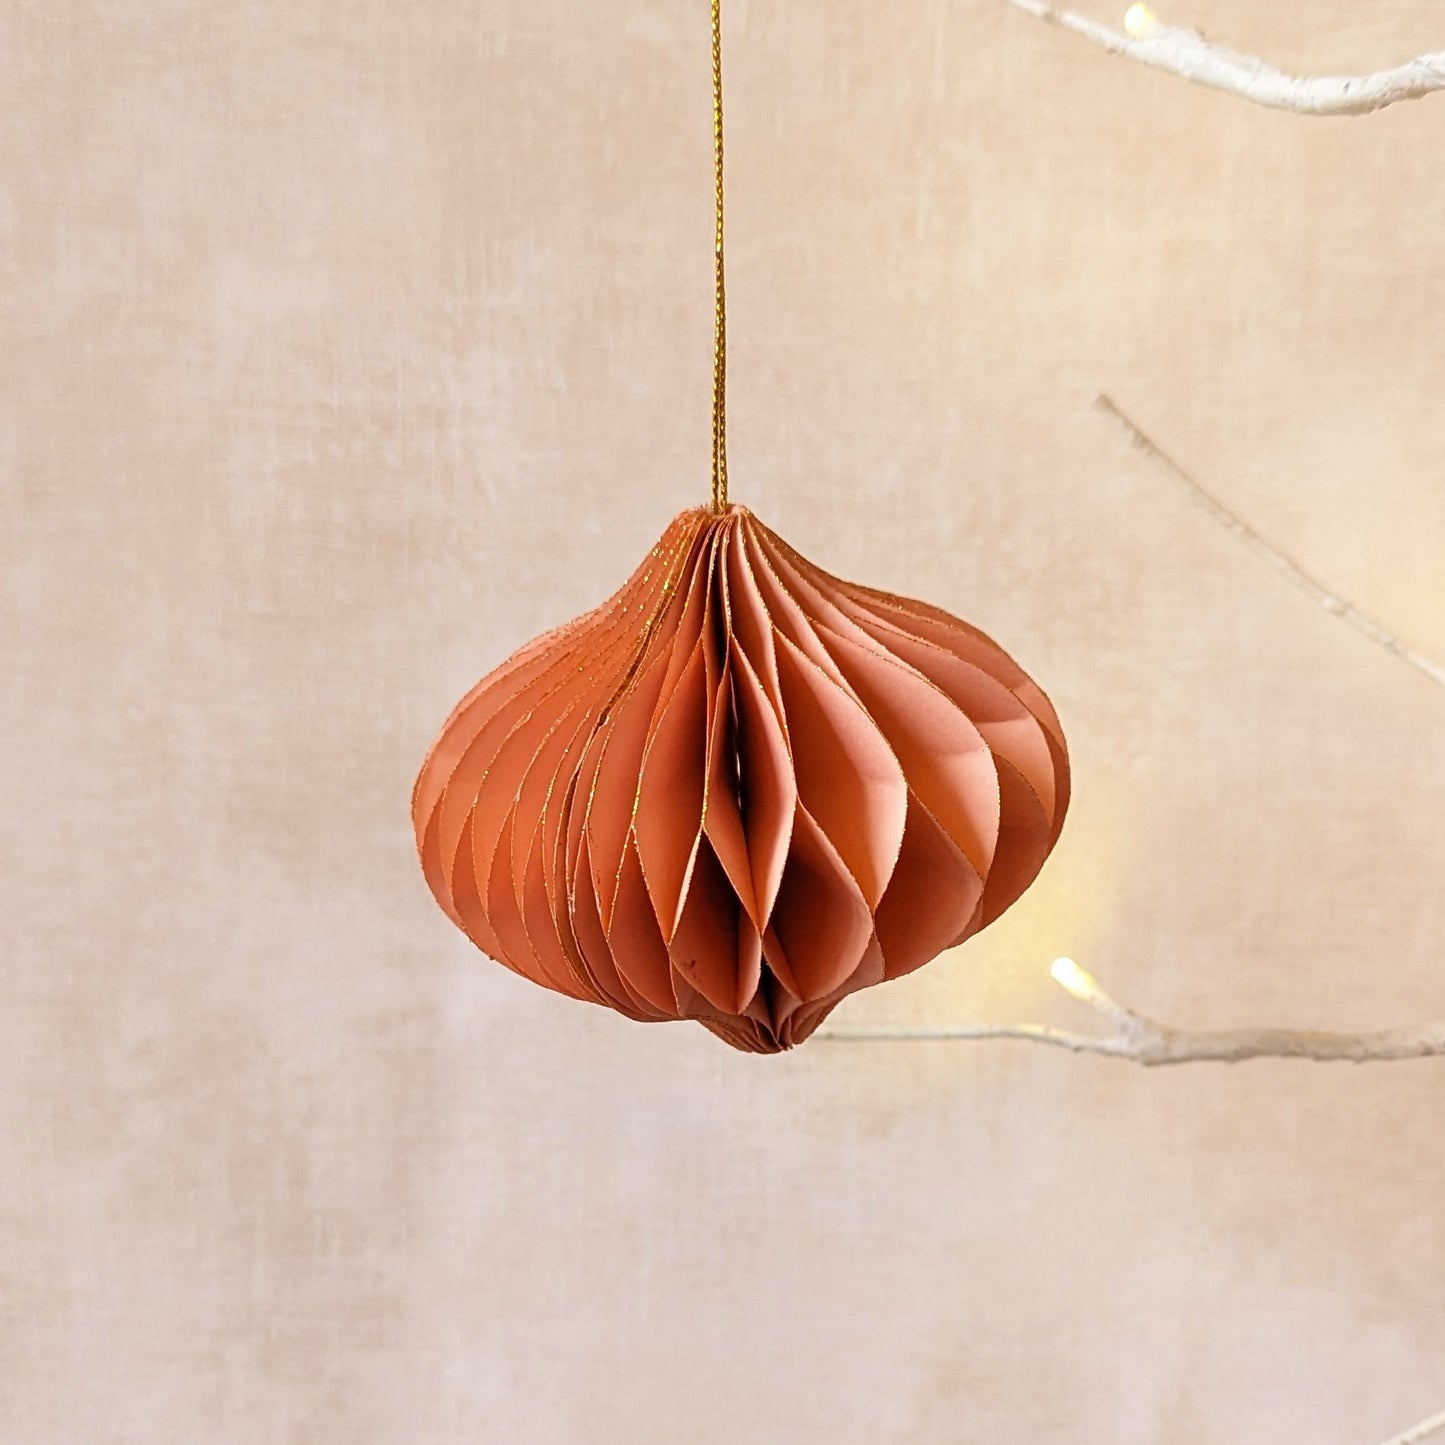 Handmade Paper Ornament - Peach